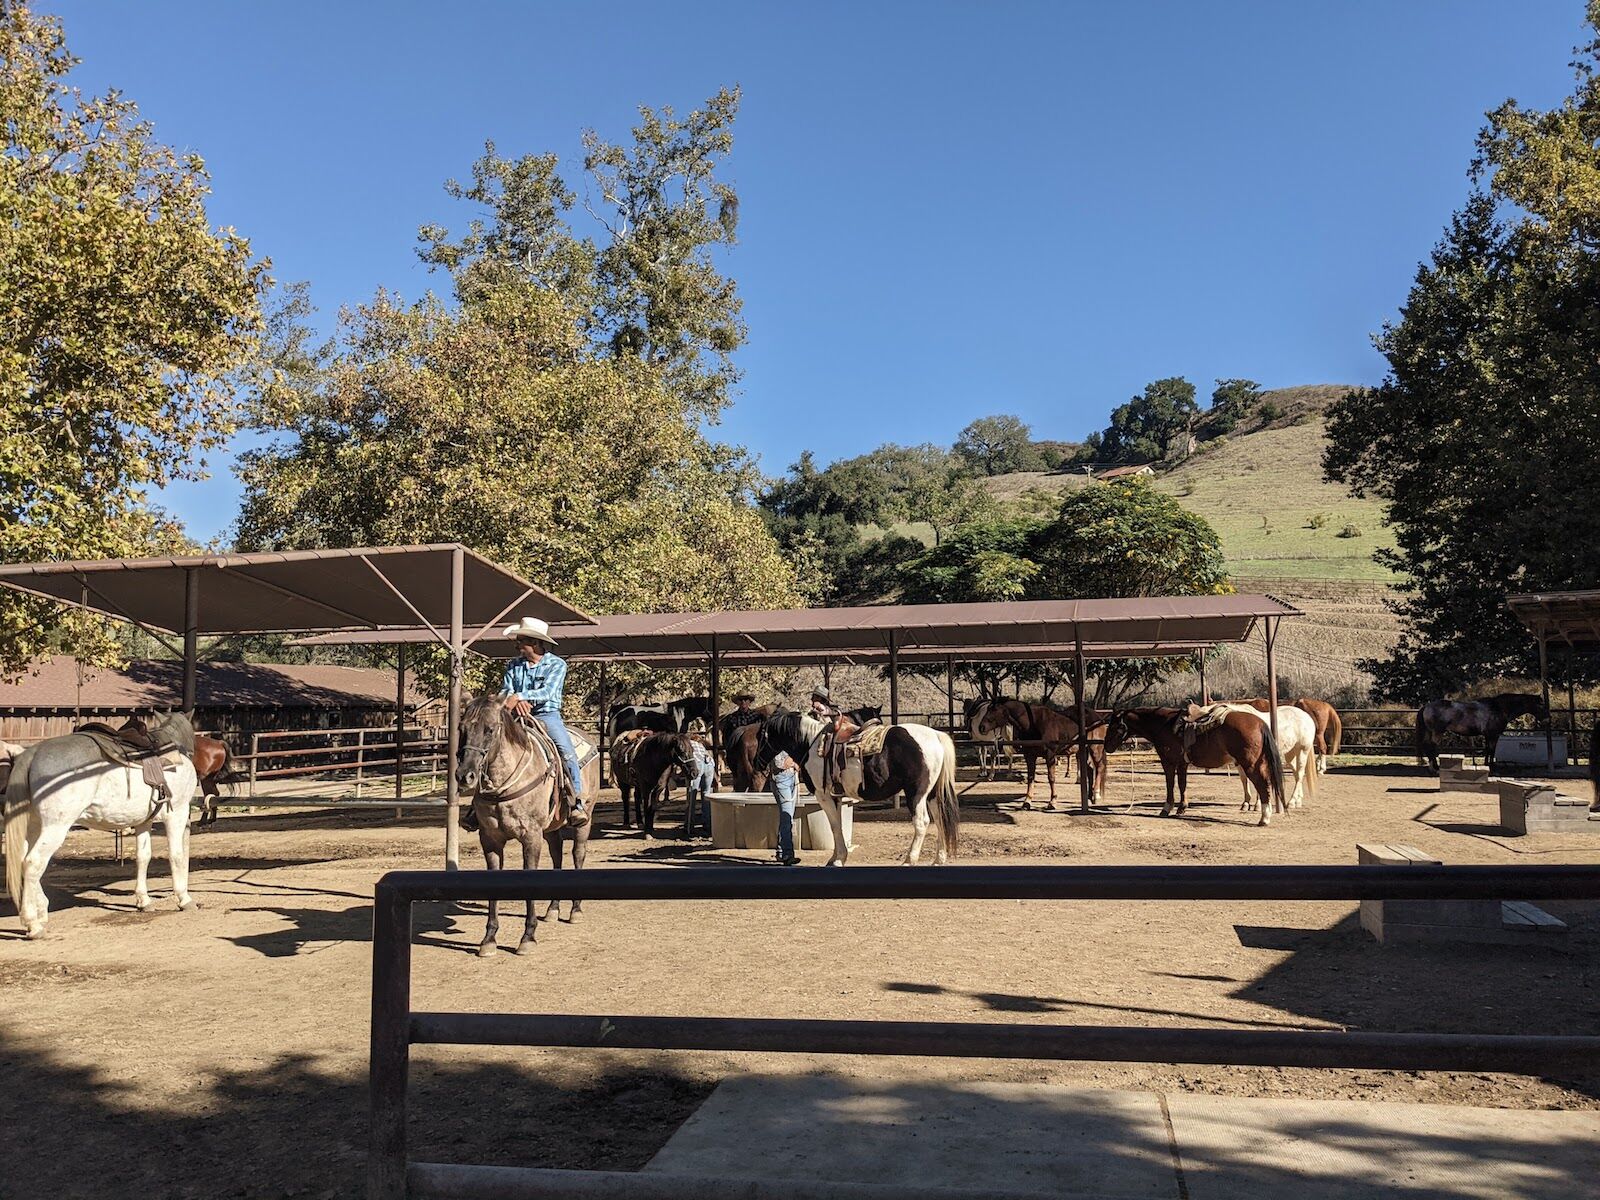 The corral at Alisal California dude ranch